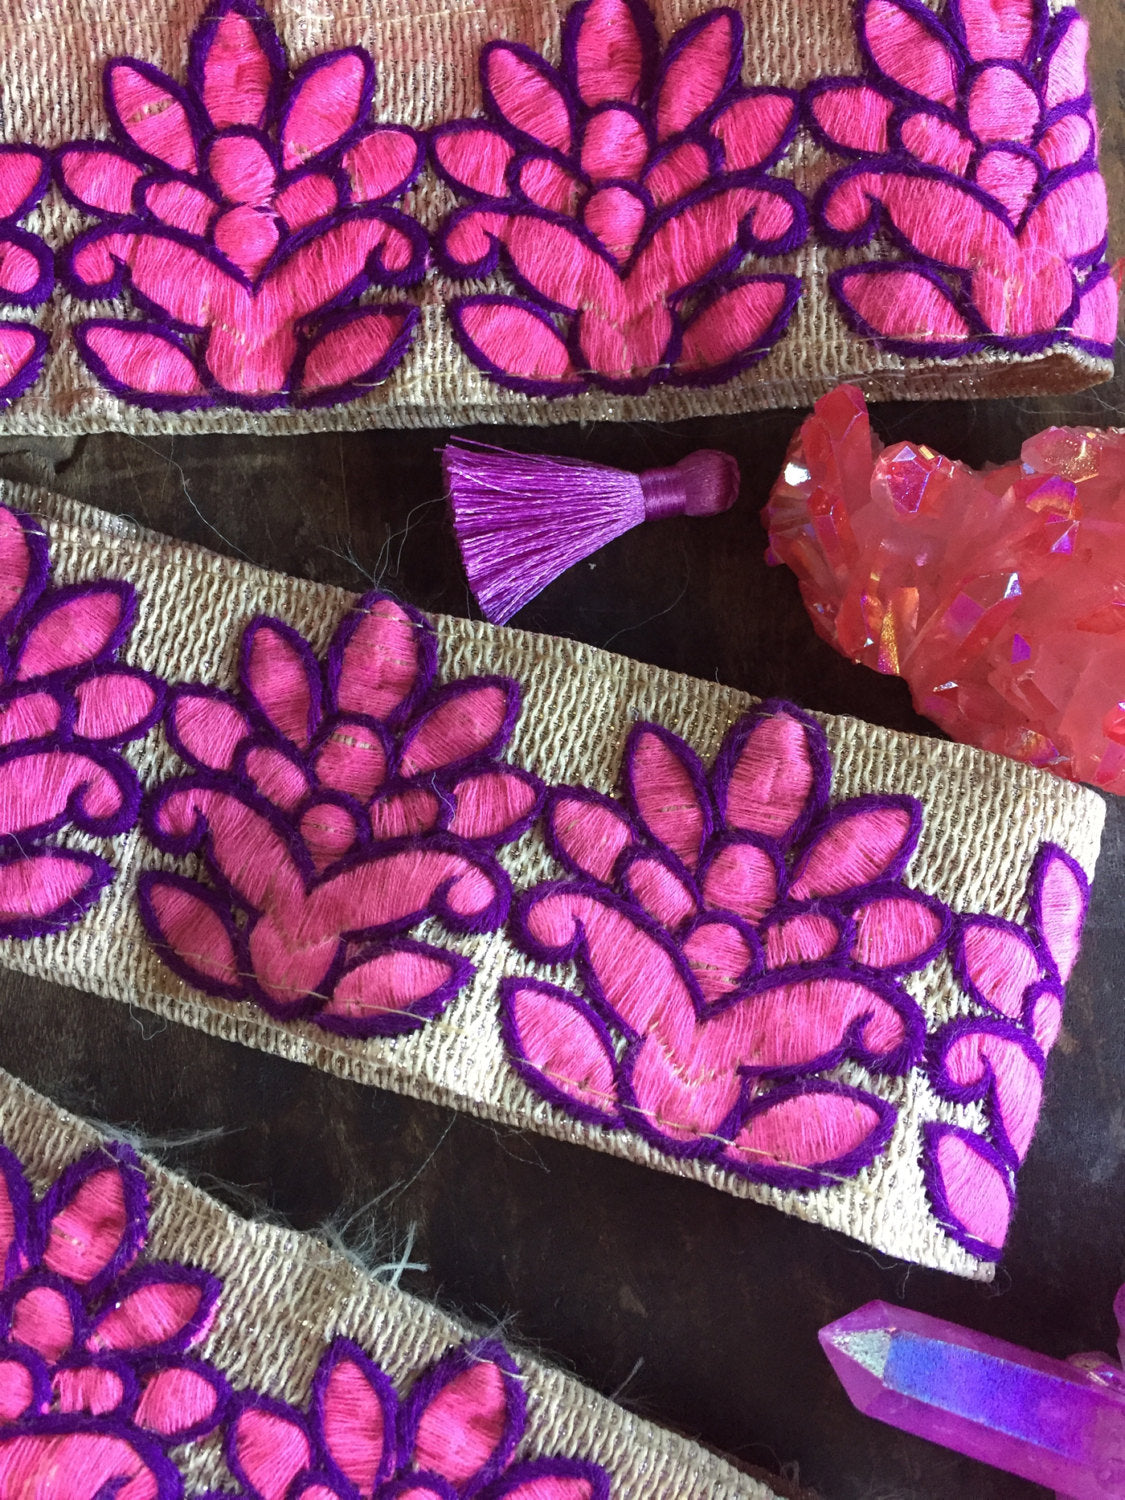 Pink Purple Sparkle Blossom Embroidered Trim, Sari Border from India, 2 1/8" x 1 yard - ShopWomanShopsWorld.com. Bone Beads, Tassels, Pom Poms, African Beads.